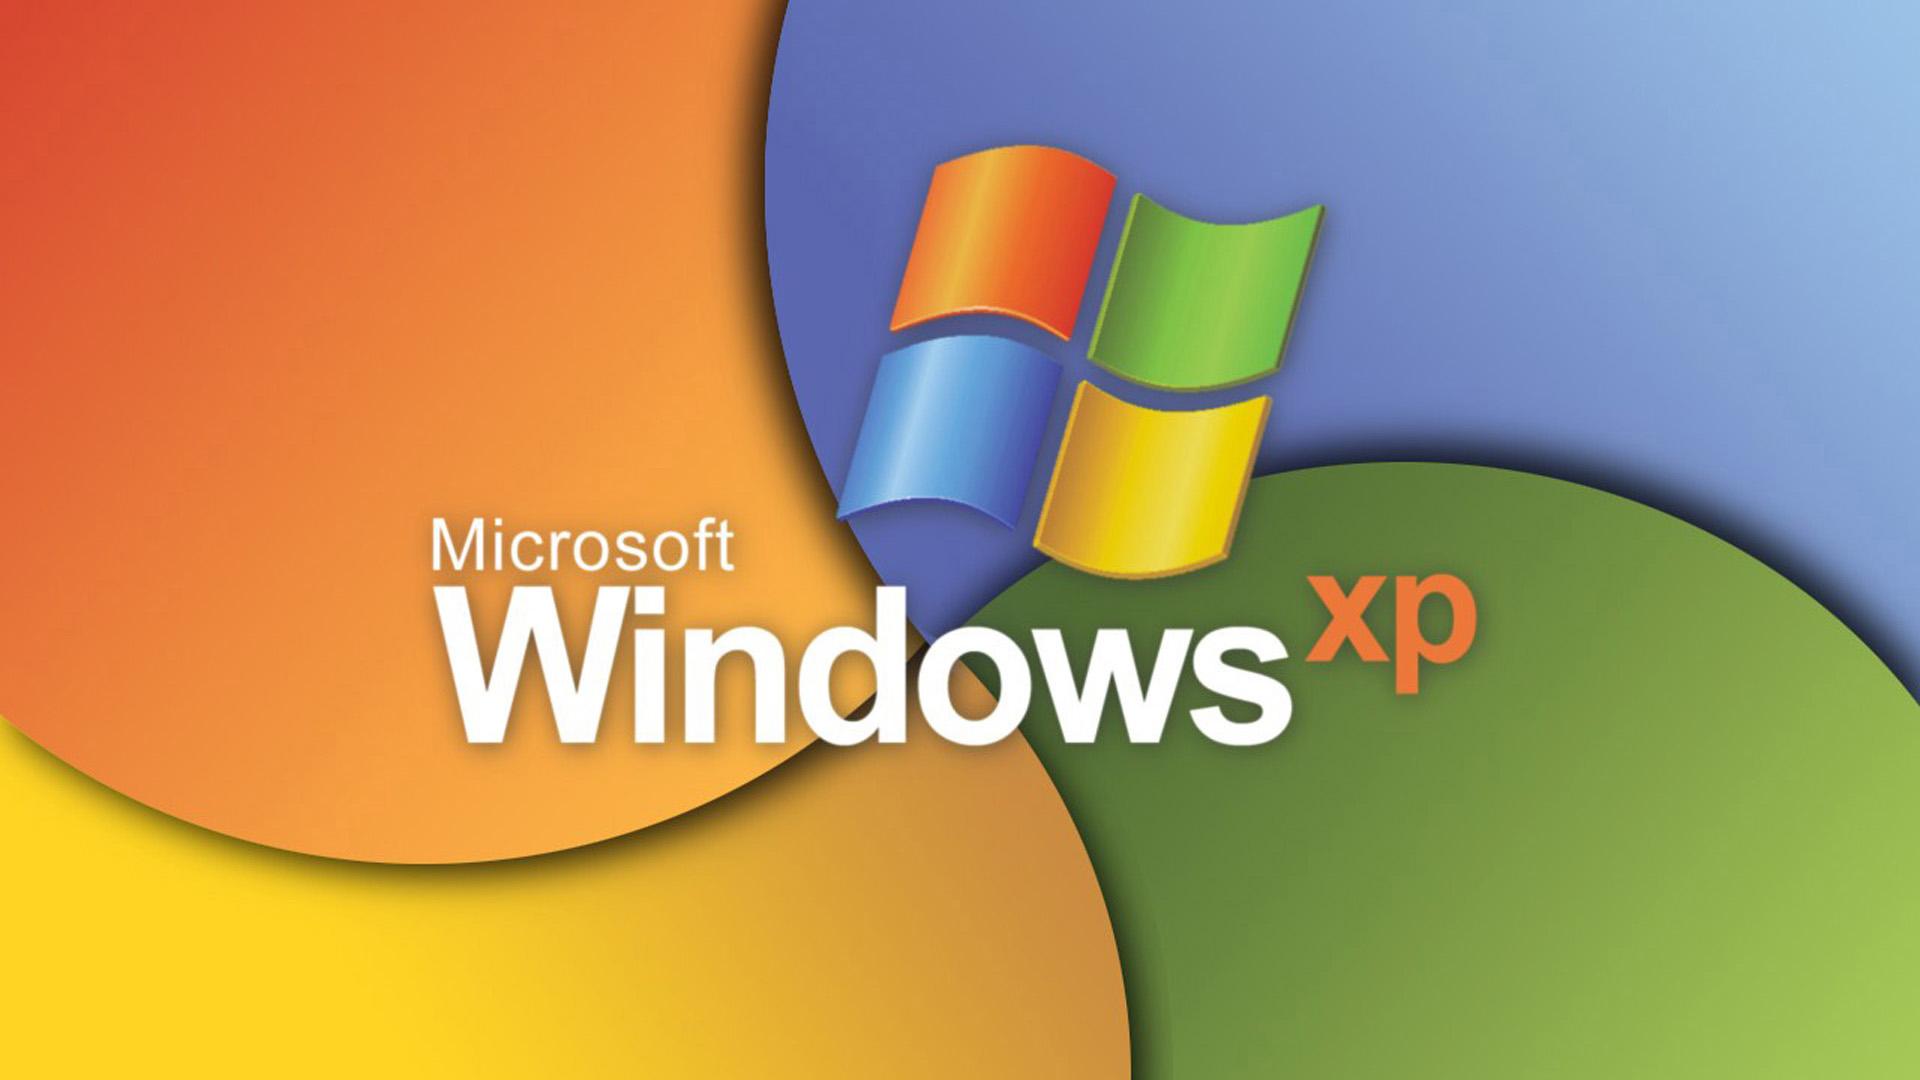 XP Logo - Windows XP Logo Wallpapers HD 1920x1080 - Majesty Computer Services ...